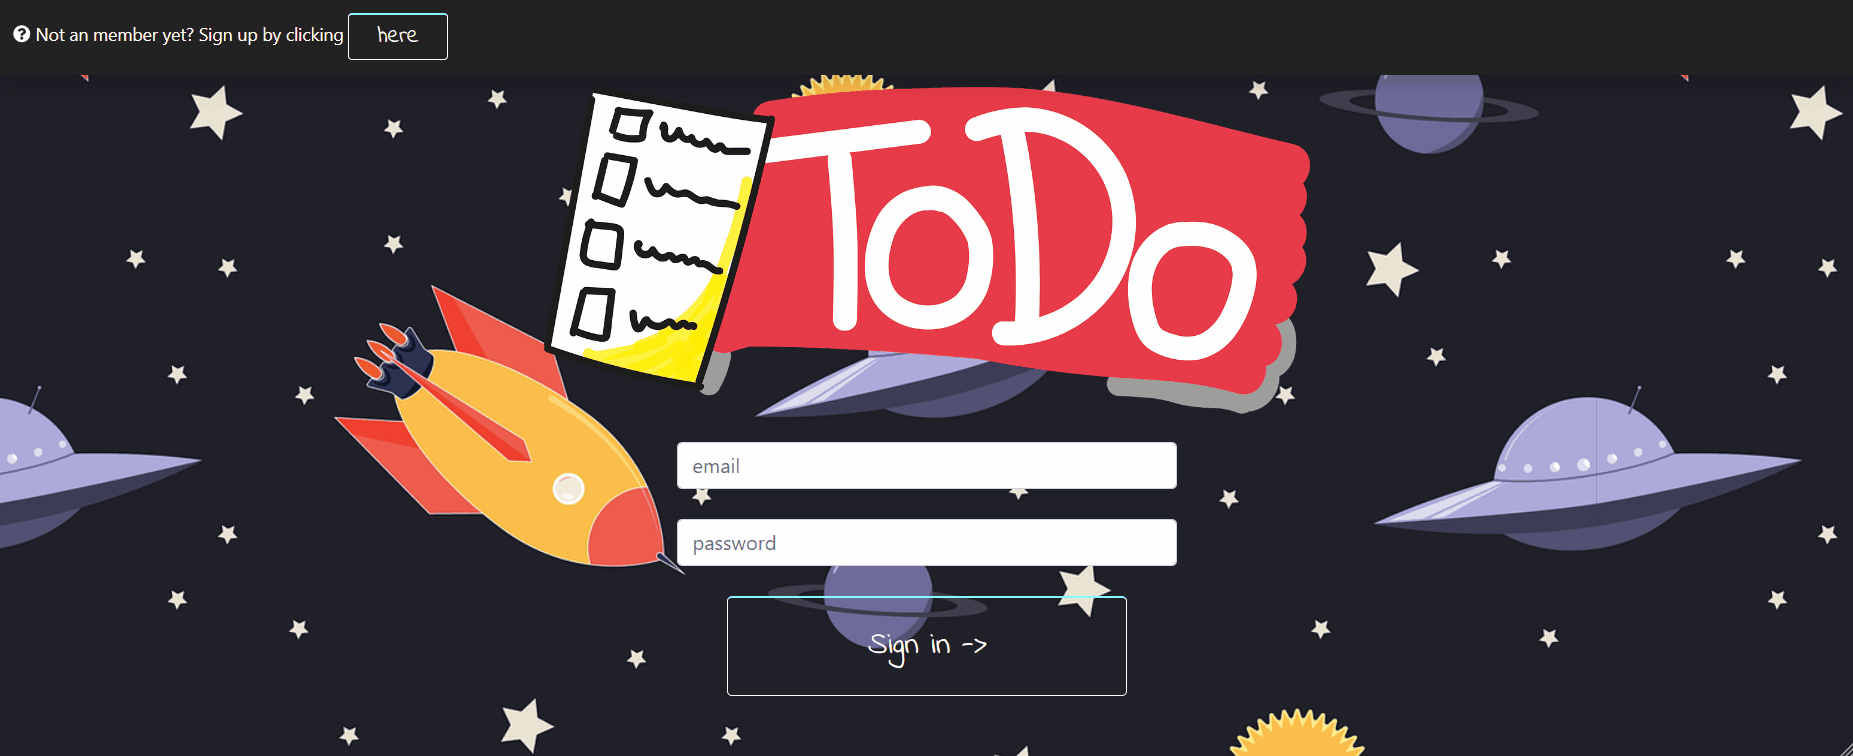 Tonodedo app gif 1